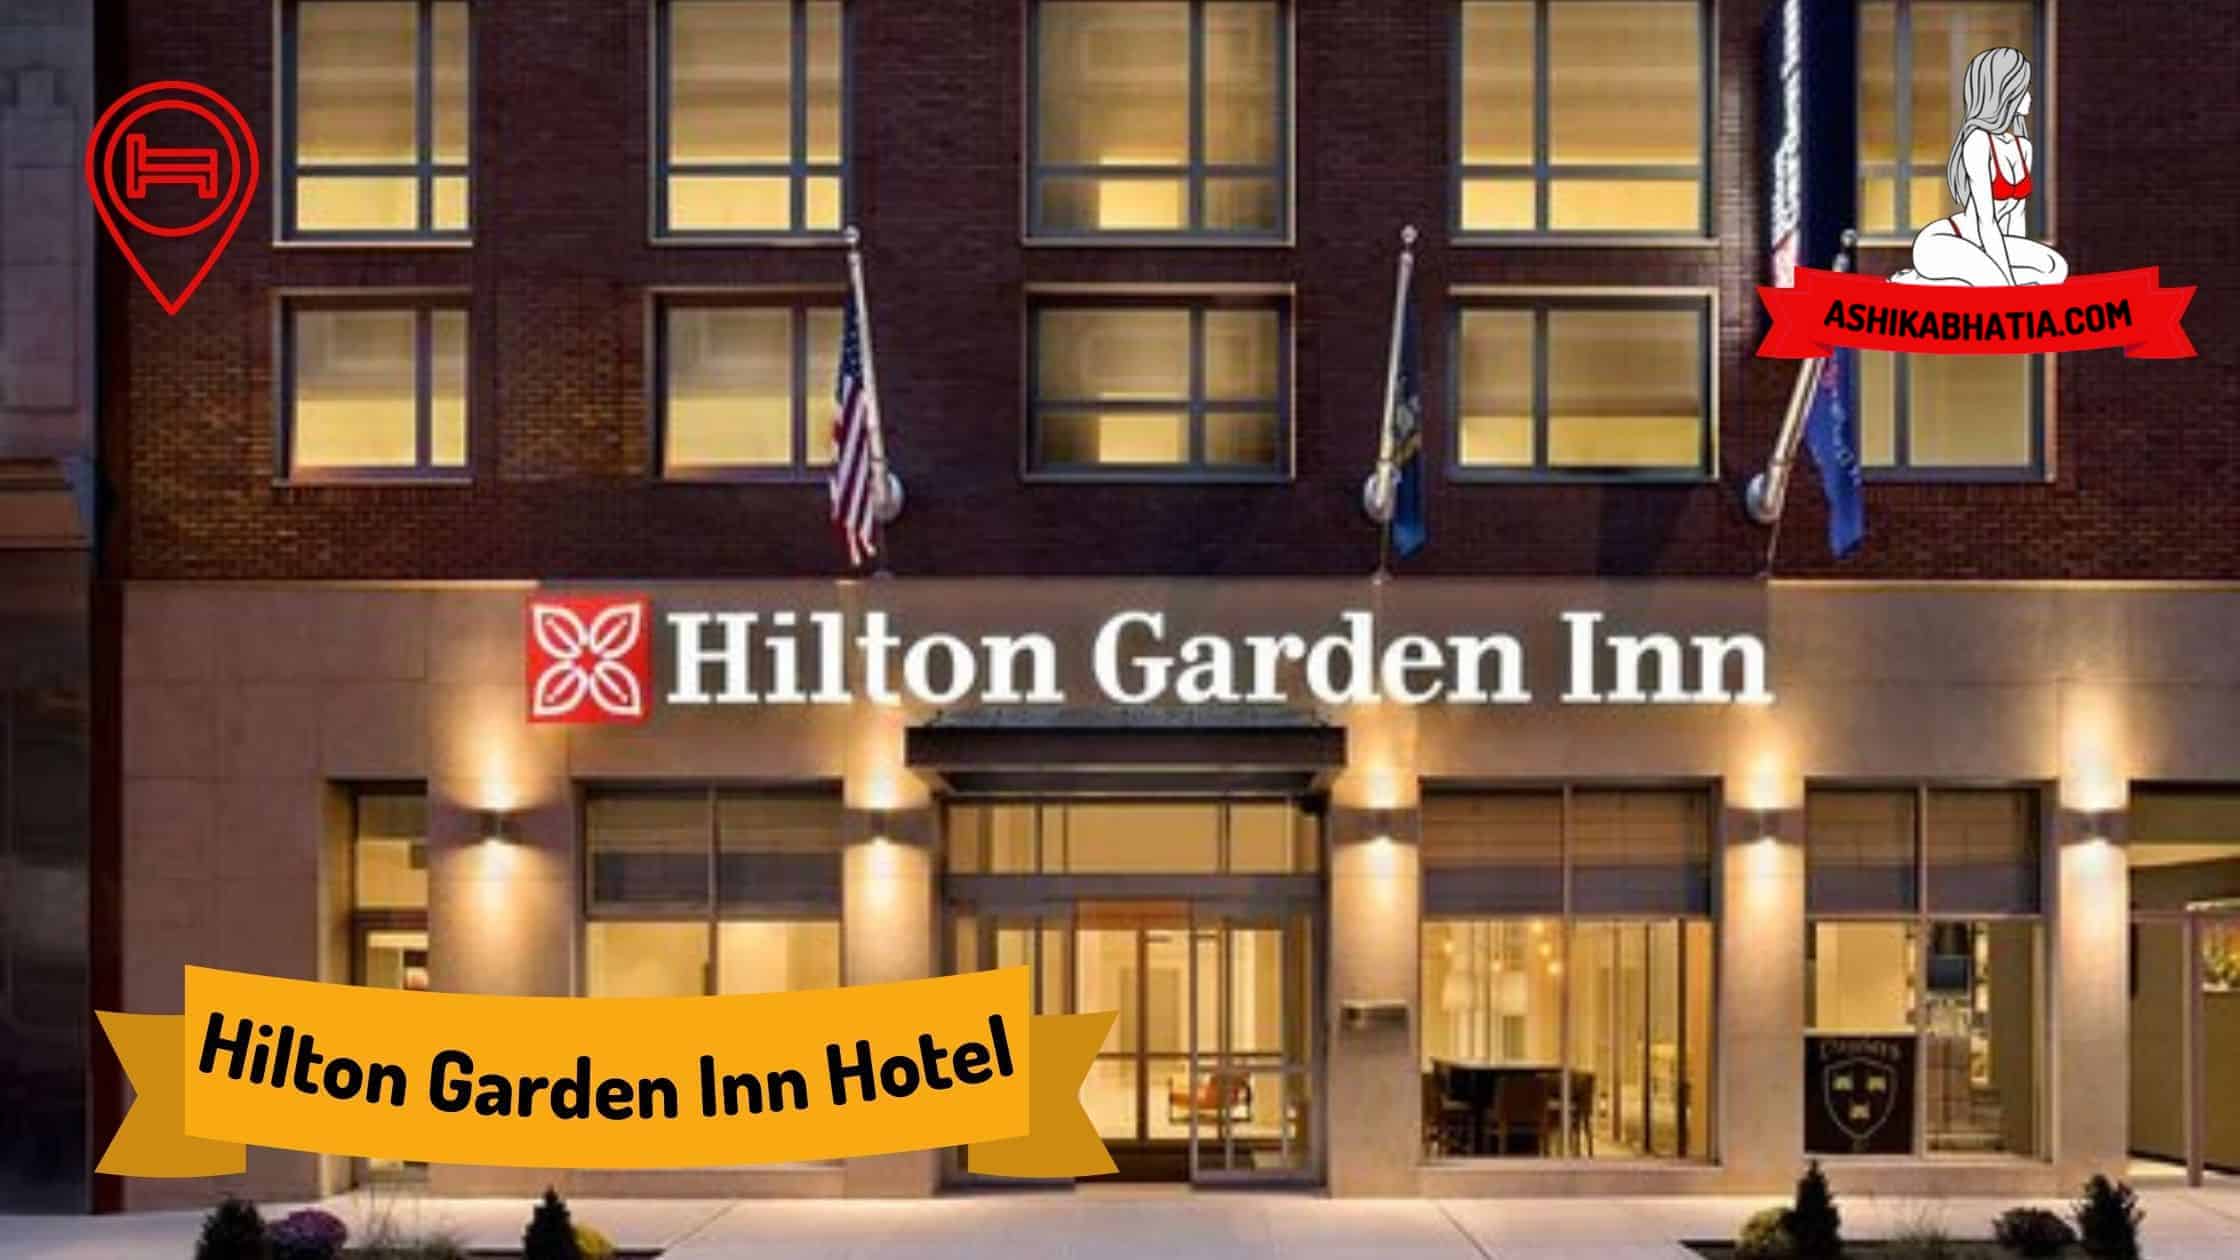 Hilton Garden Inn Hotel Escorts